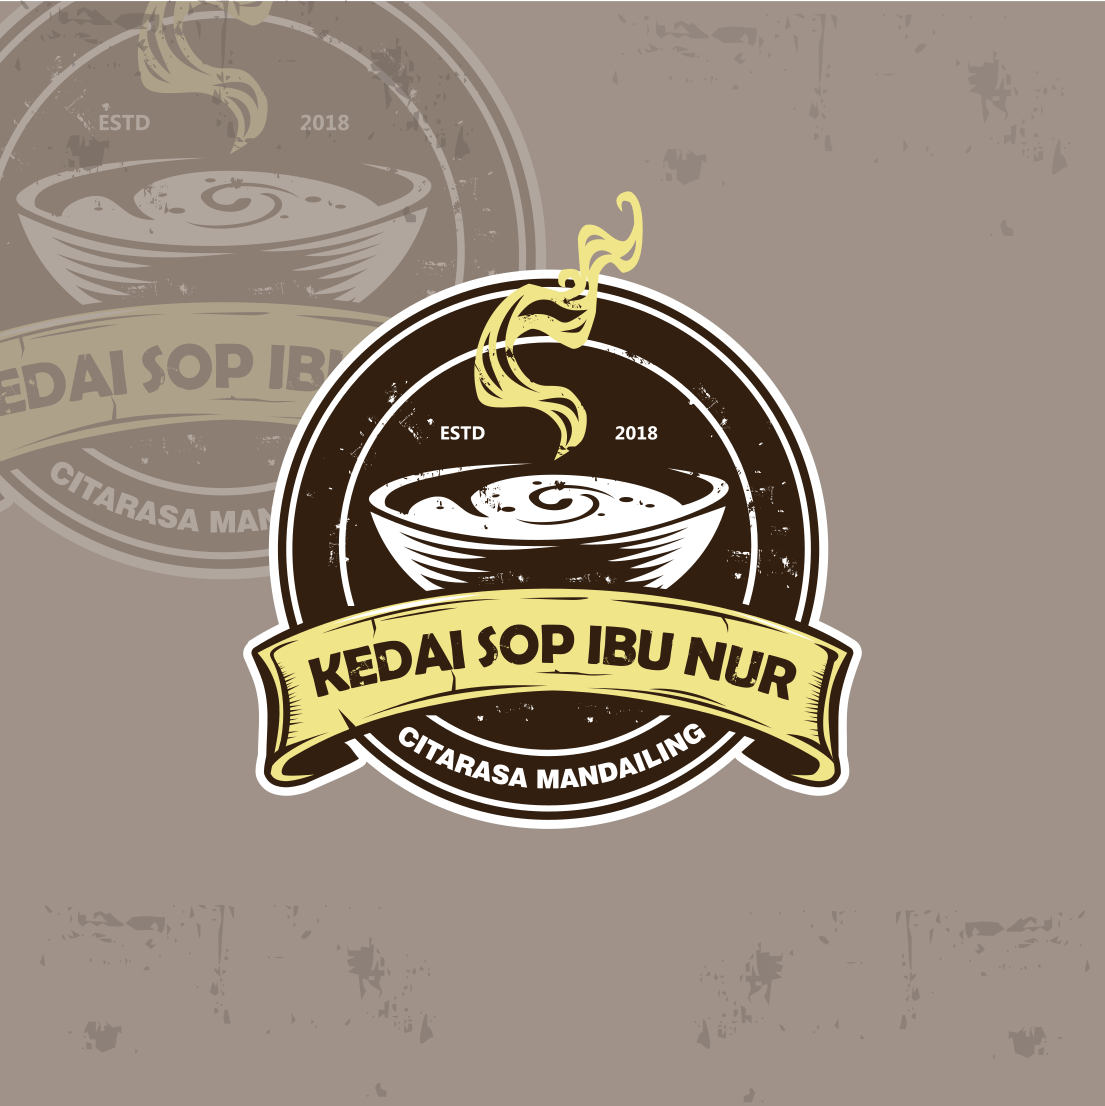 SOP Logo - Sribu: Logo Design - Desain Logo Untuk Kedai Sop Ibu Nur